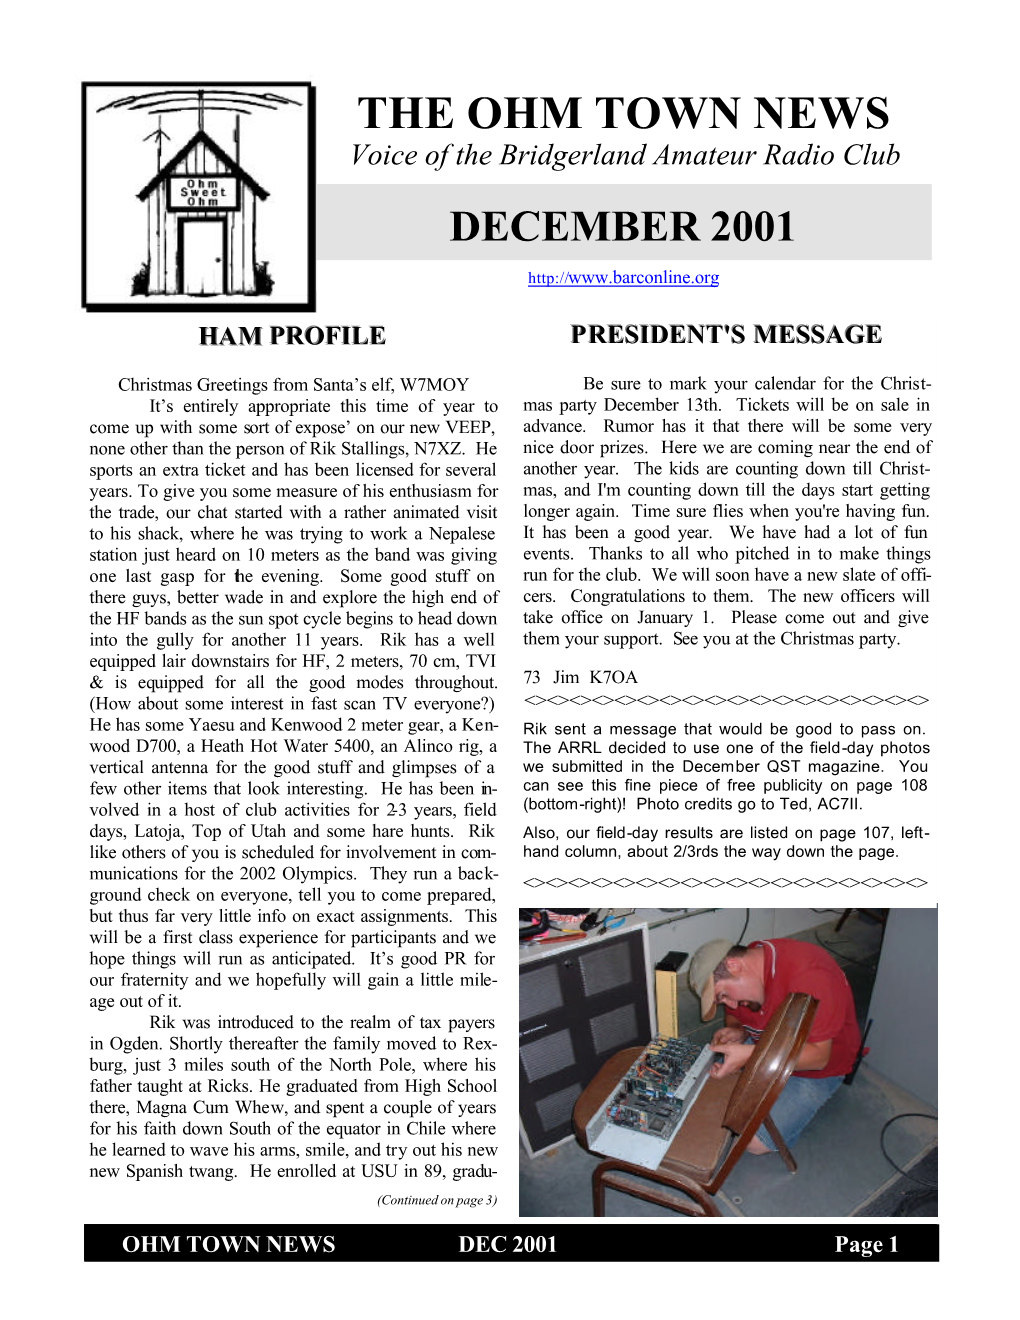 THE OHM TOWN NEWS Voice of the Bridgerland Amateur Radio Club DECEMBER 2001